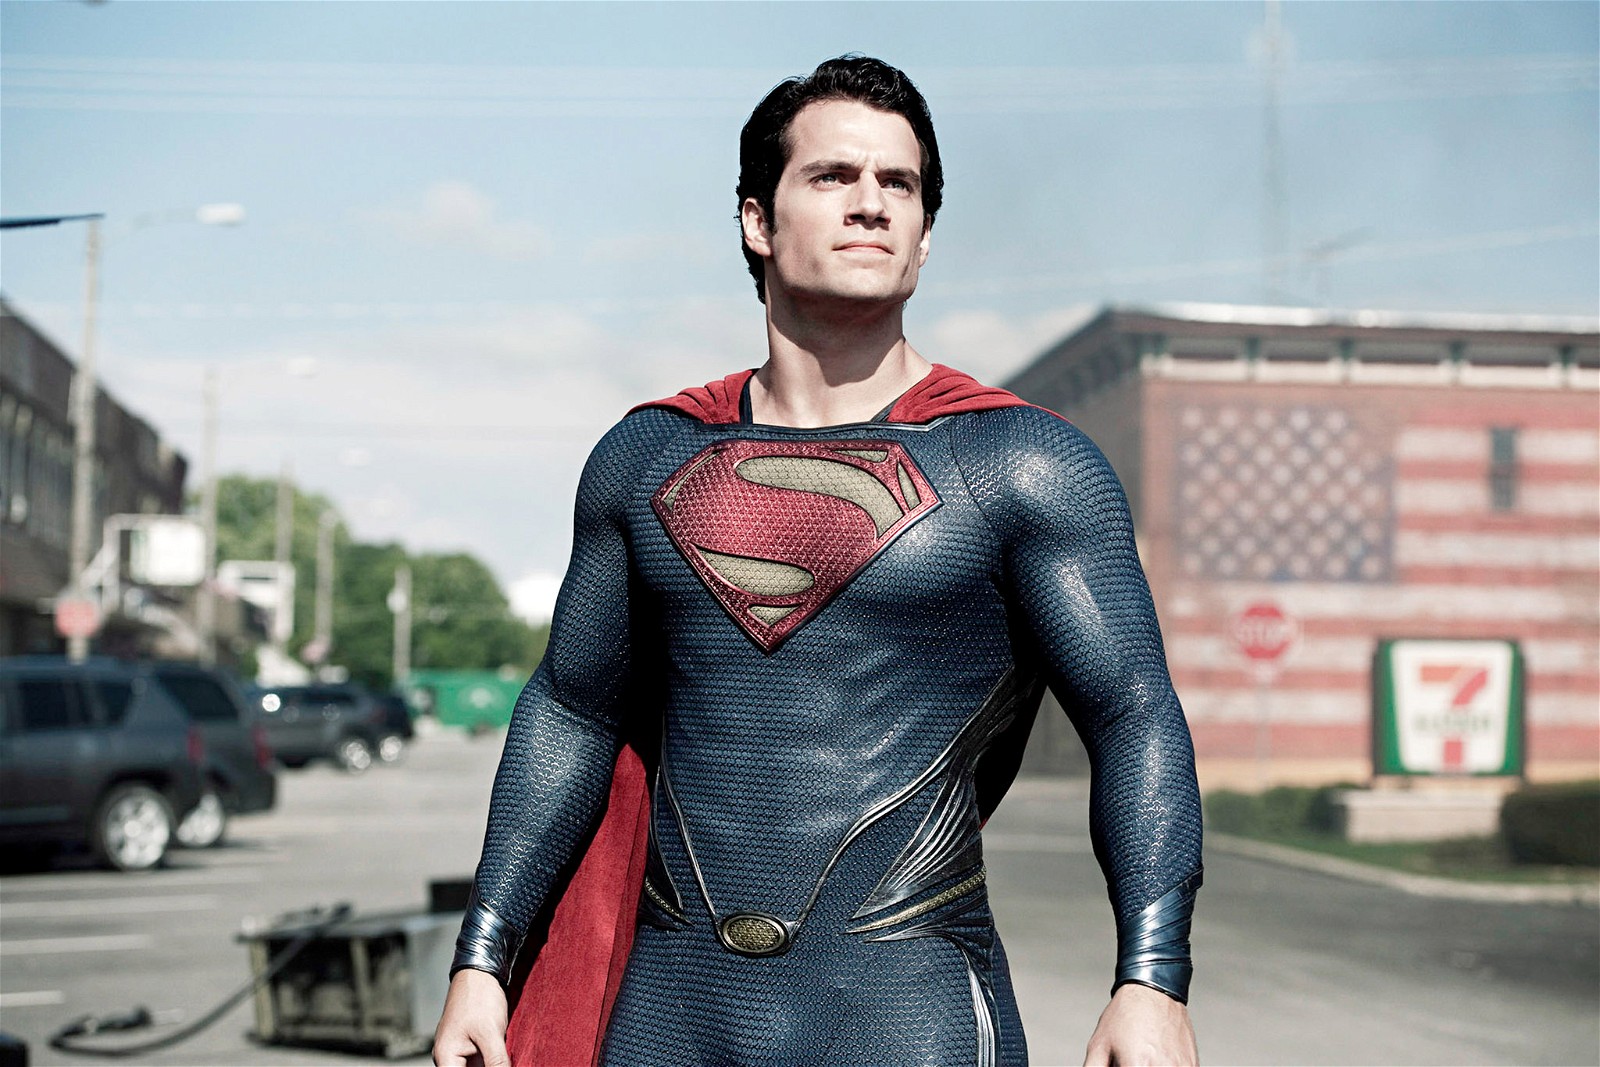 Henry Cavill as Clark Kent/ Superman in Zack Snyder's Man of Steel